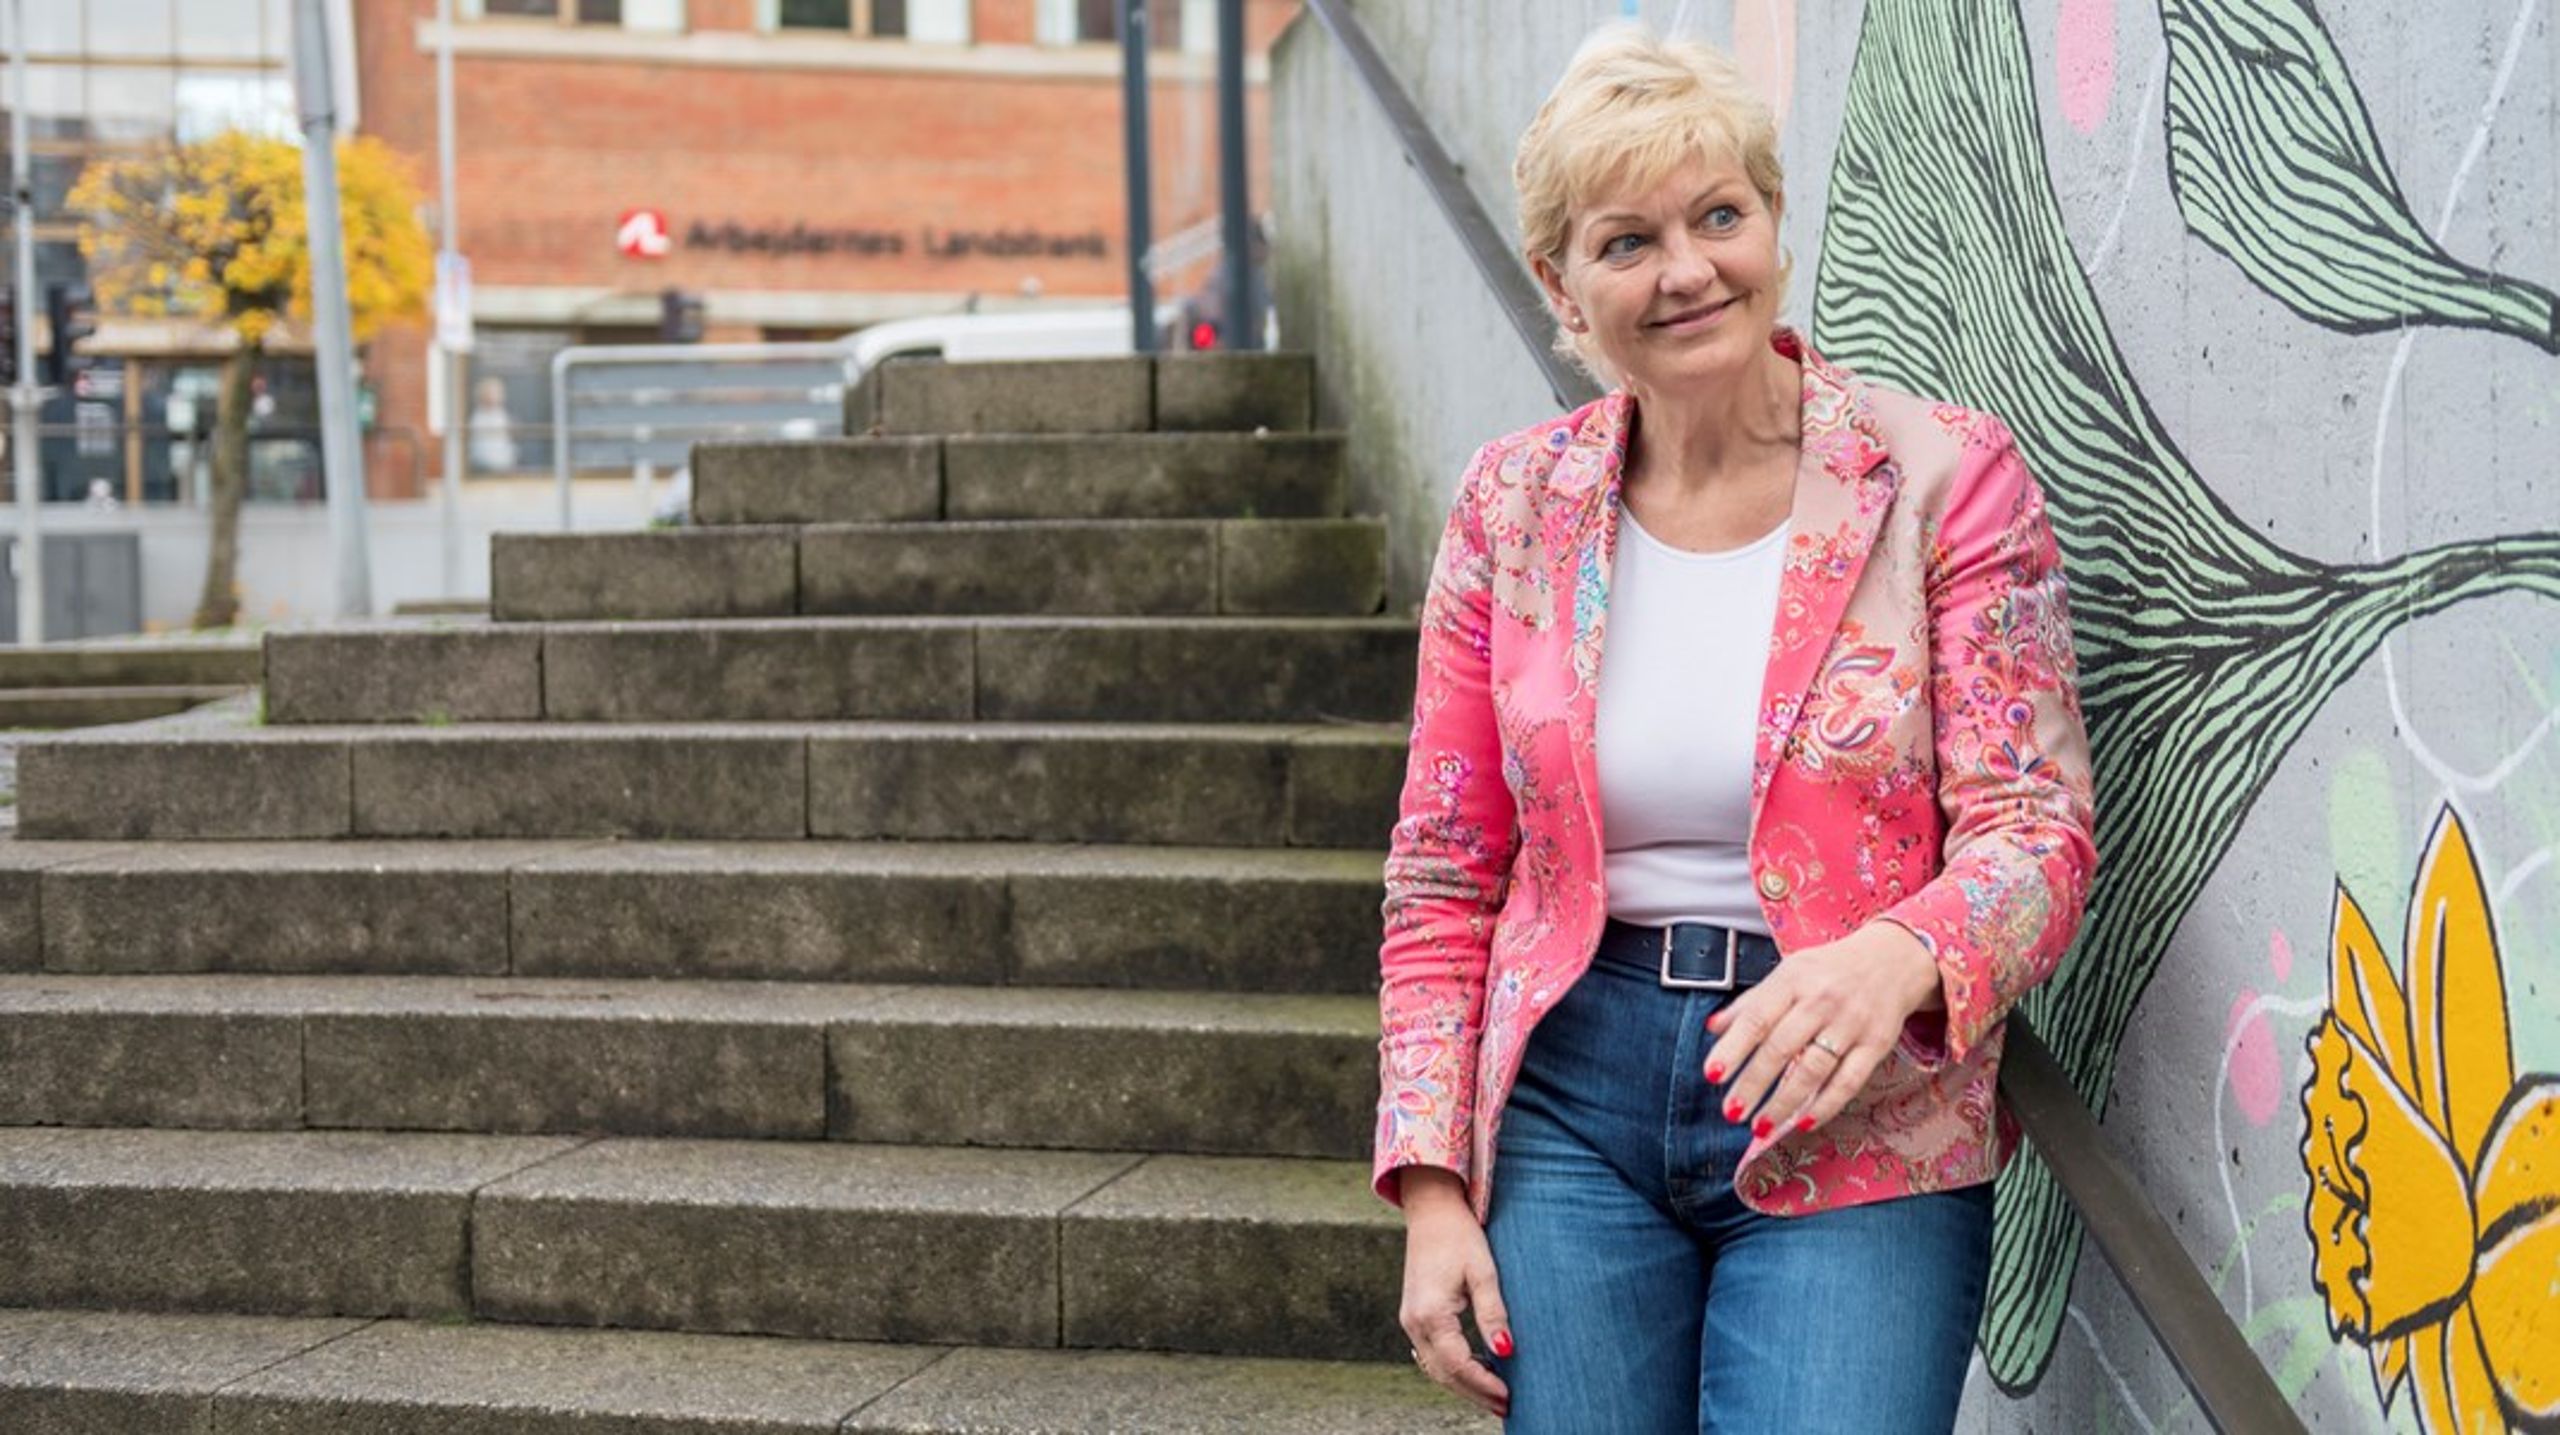 Venstres folketingsmedlem Eva Kjer Hansen blev ikke borgmester i Kolding, men nu bliver hun formand for kommunens kulturudvalg.